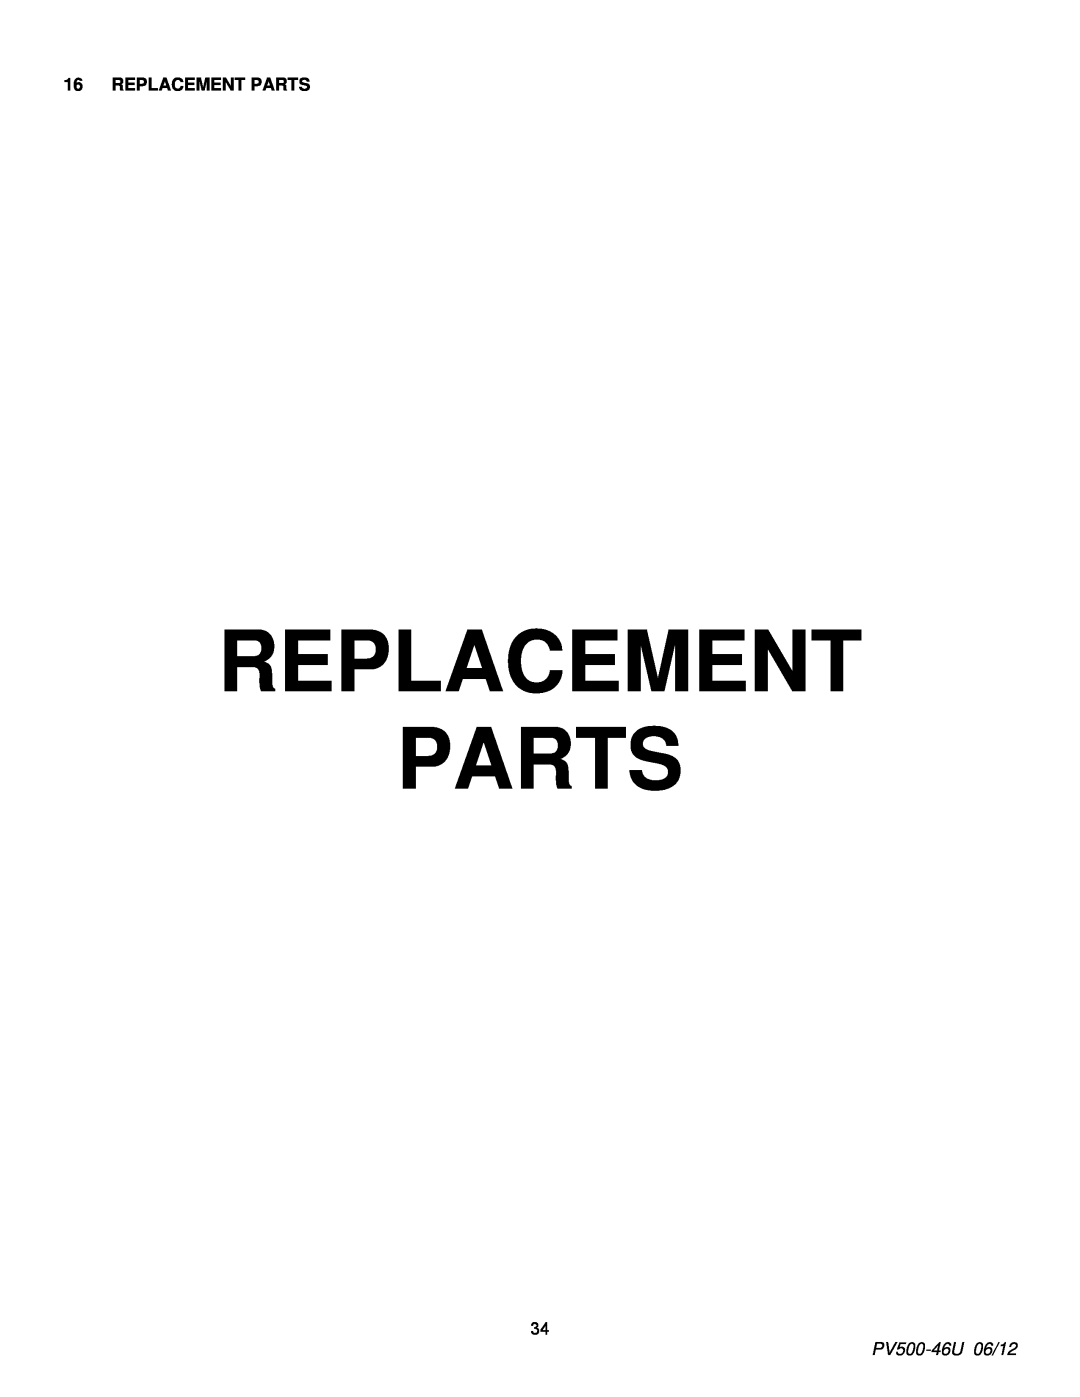 PVI Industries 180, 150 manual Replacement Parts, PV500-46U06/12 